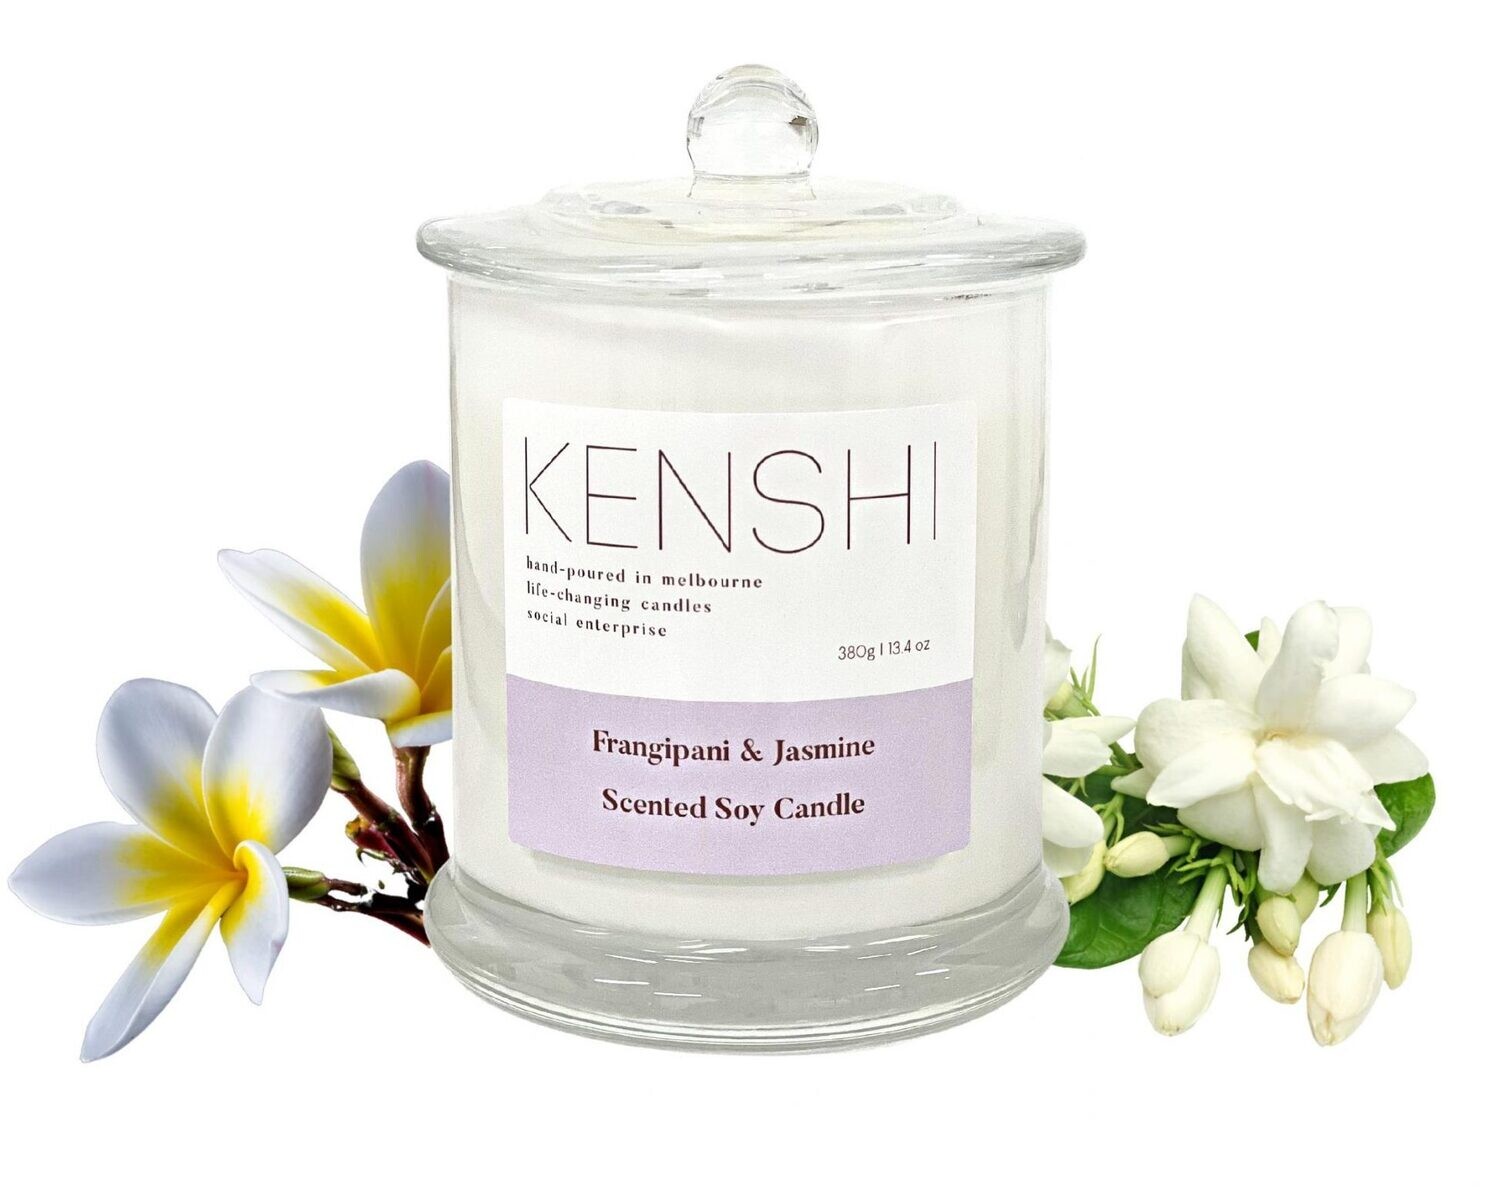 KENSHI - Frangipani & Jasmine Candle - 380g